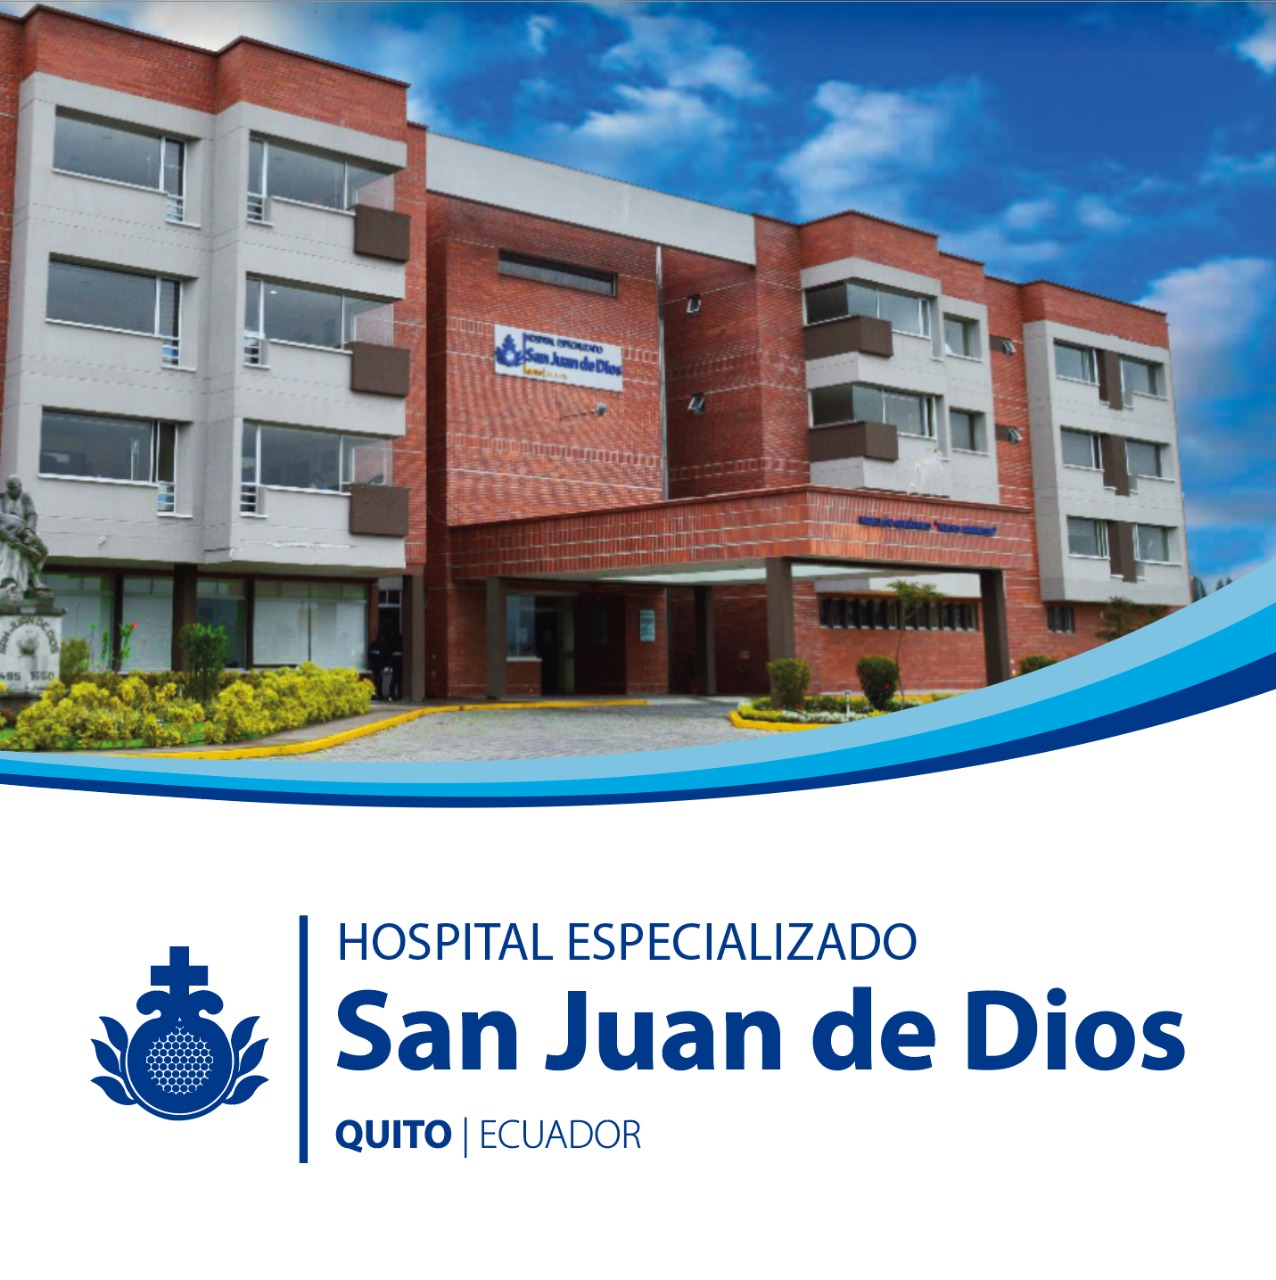 Centro Ecuador Hospital Especializado San Juan de Dios | Orden Hospitalaria San Juan de Dios